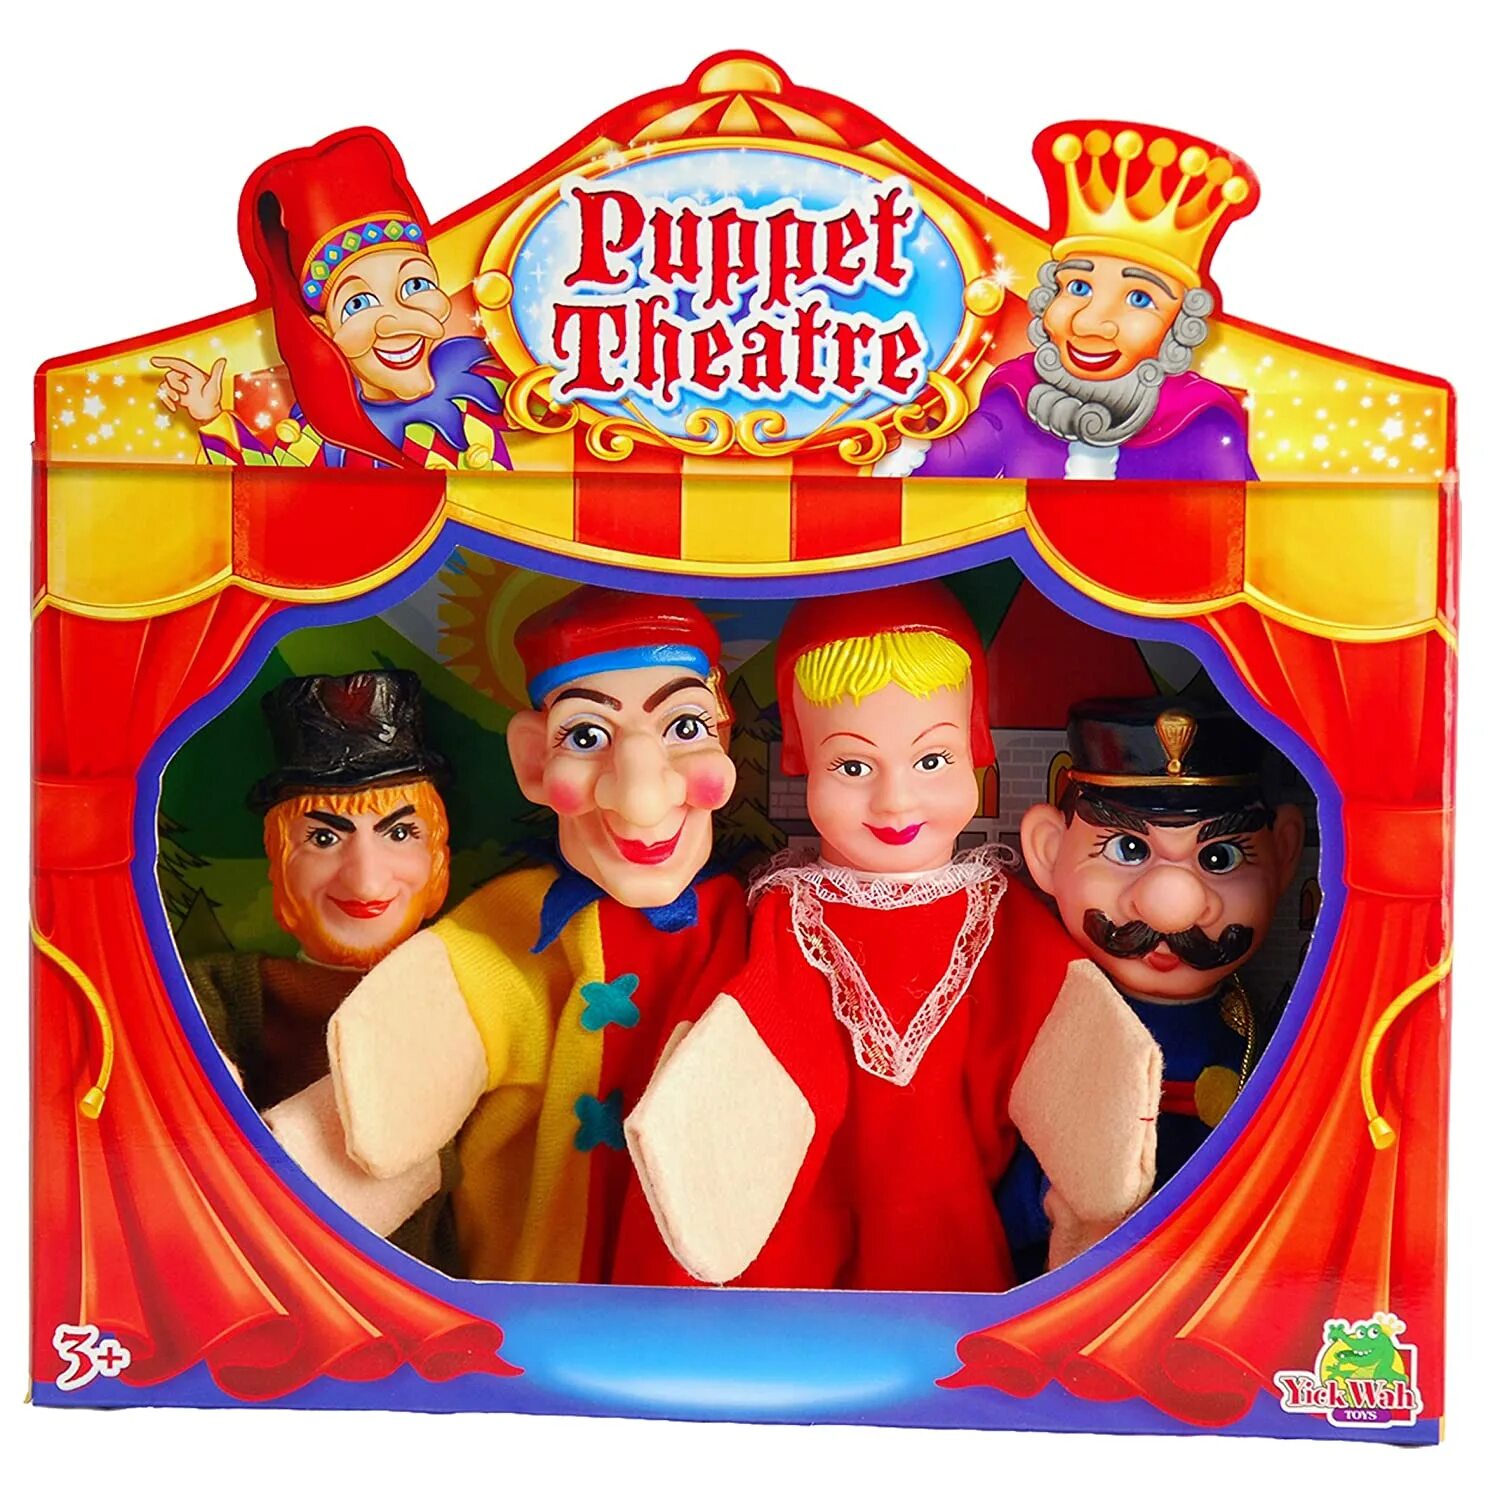 Little puppets перевод. Hand Puppet. Punch and Judy Puppet Theatre Toys. Puppet show толстовка. Puppet show Magic.